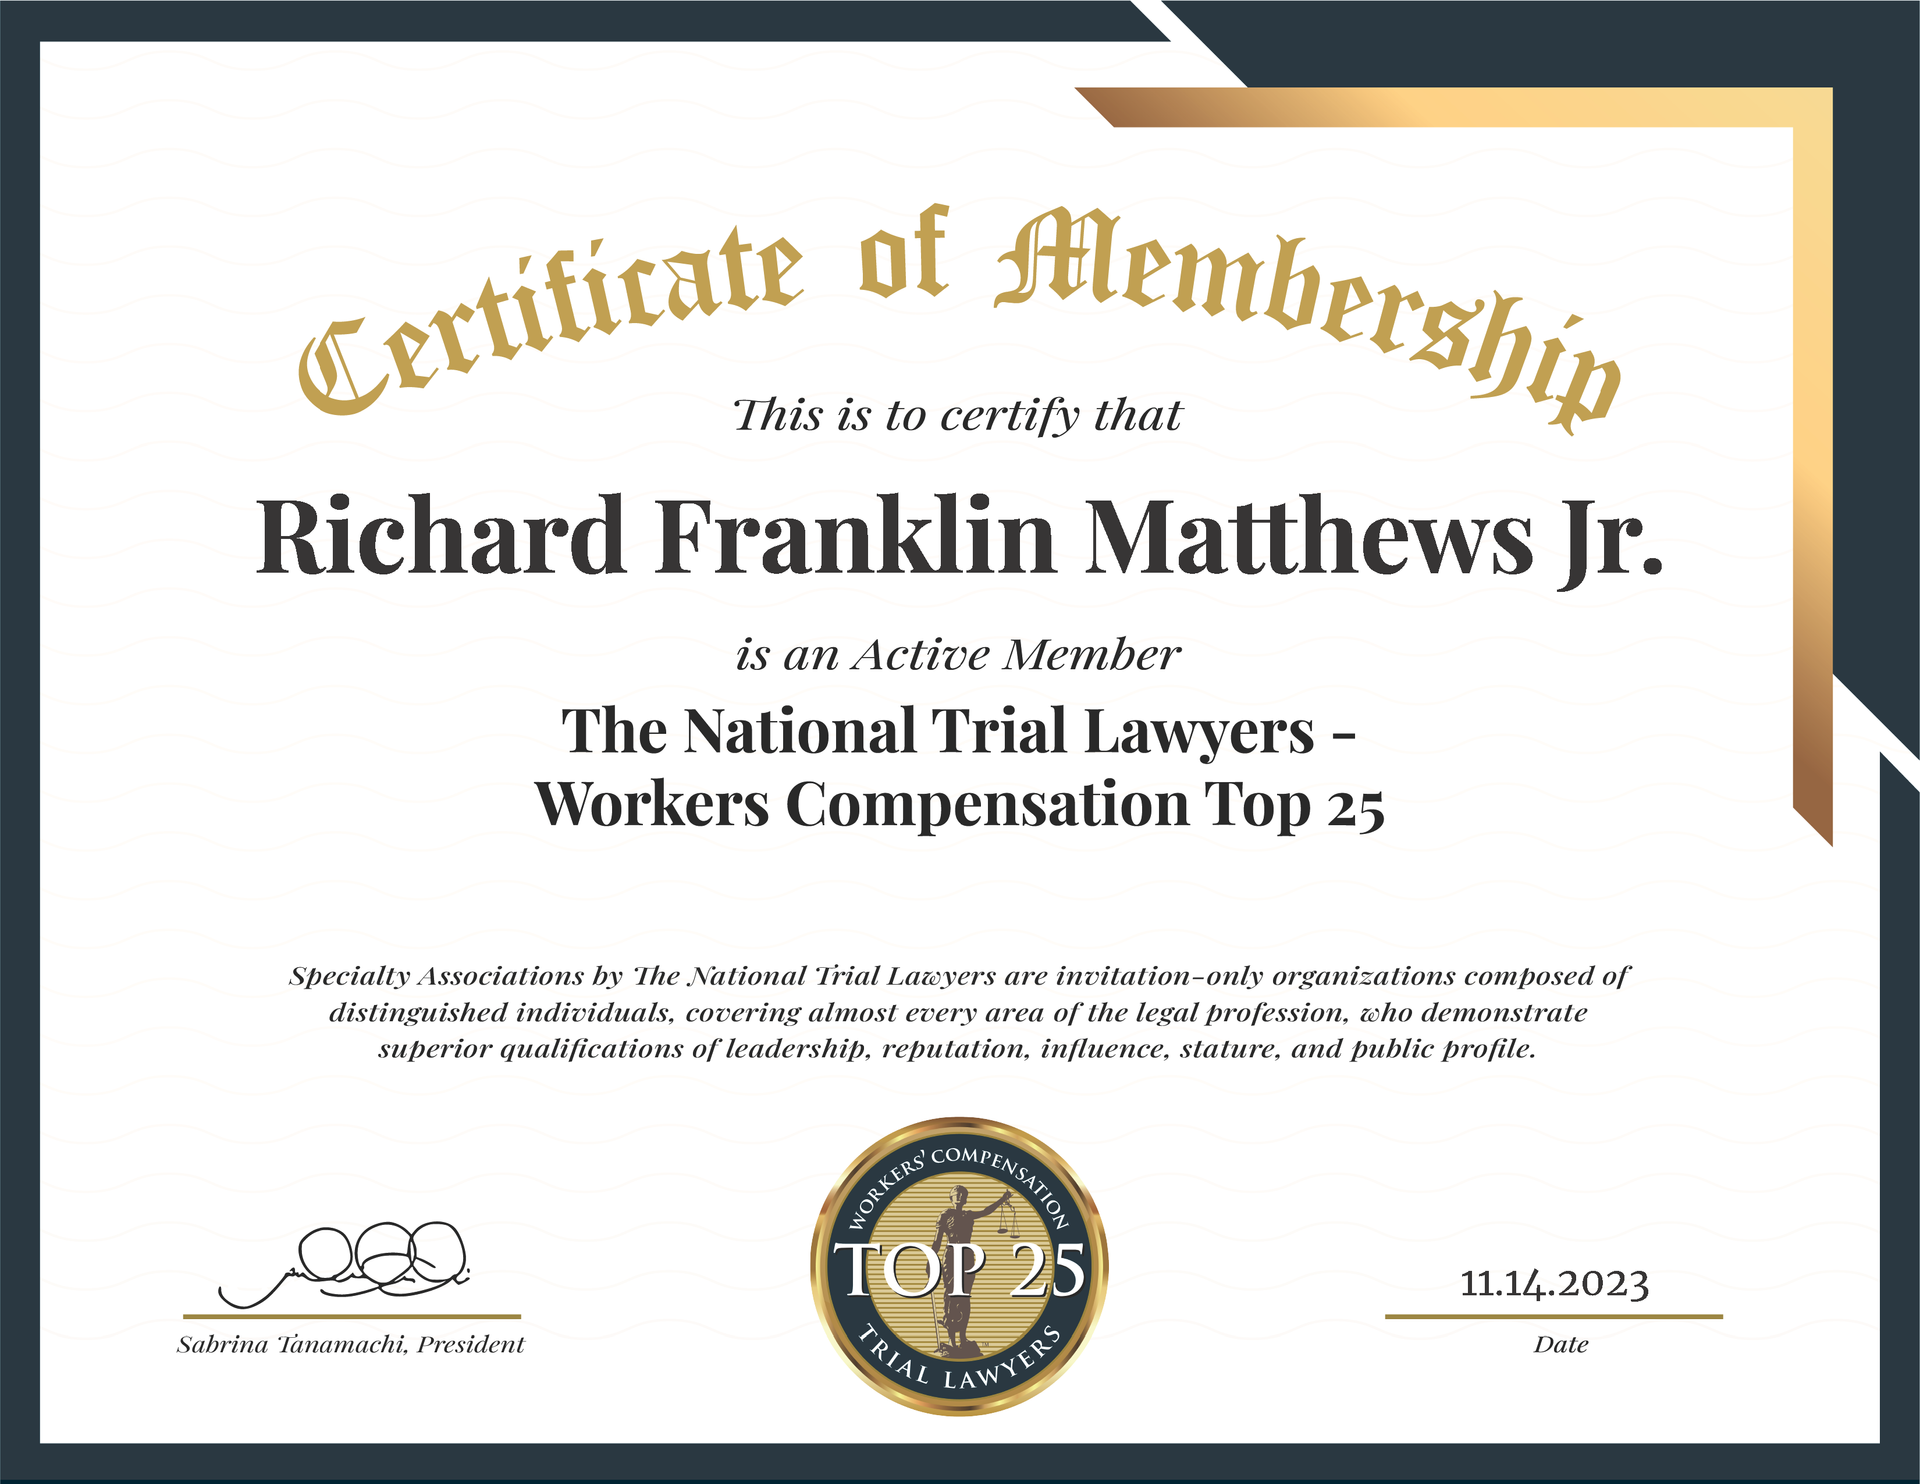 a certificate of membership for richard franklin matthews jr.